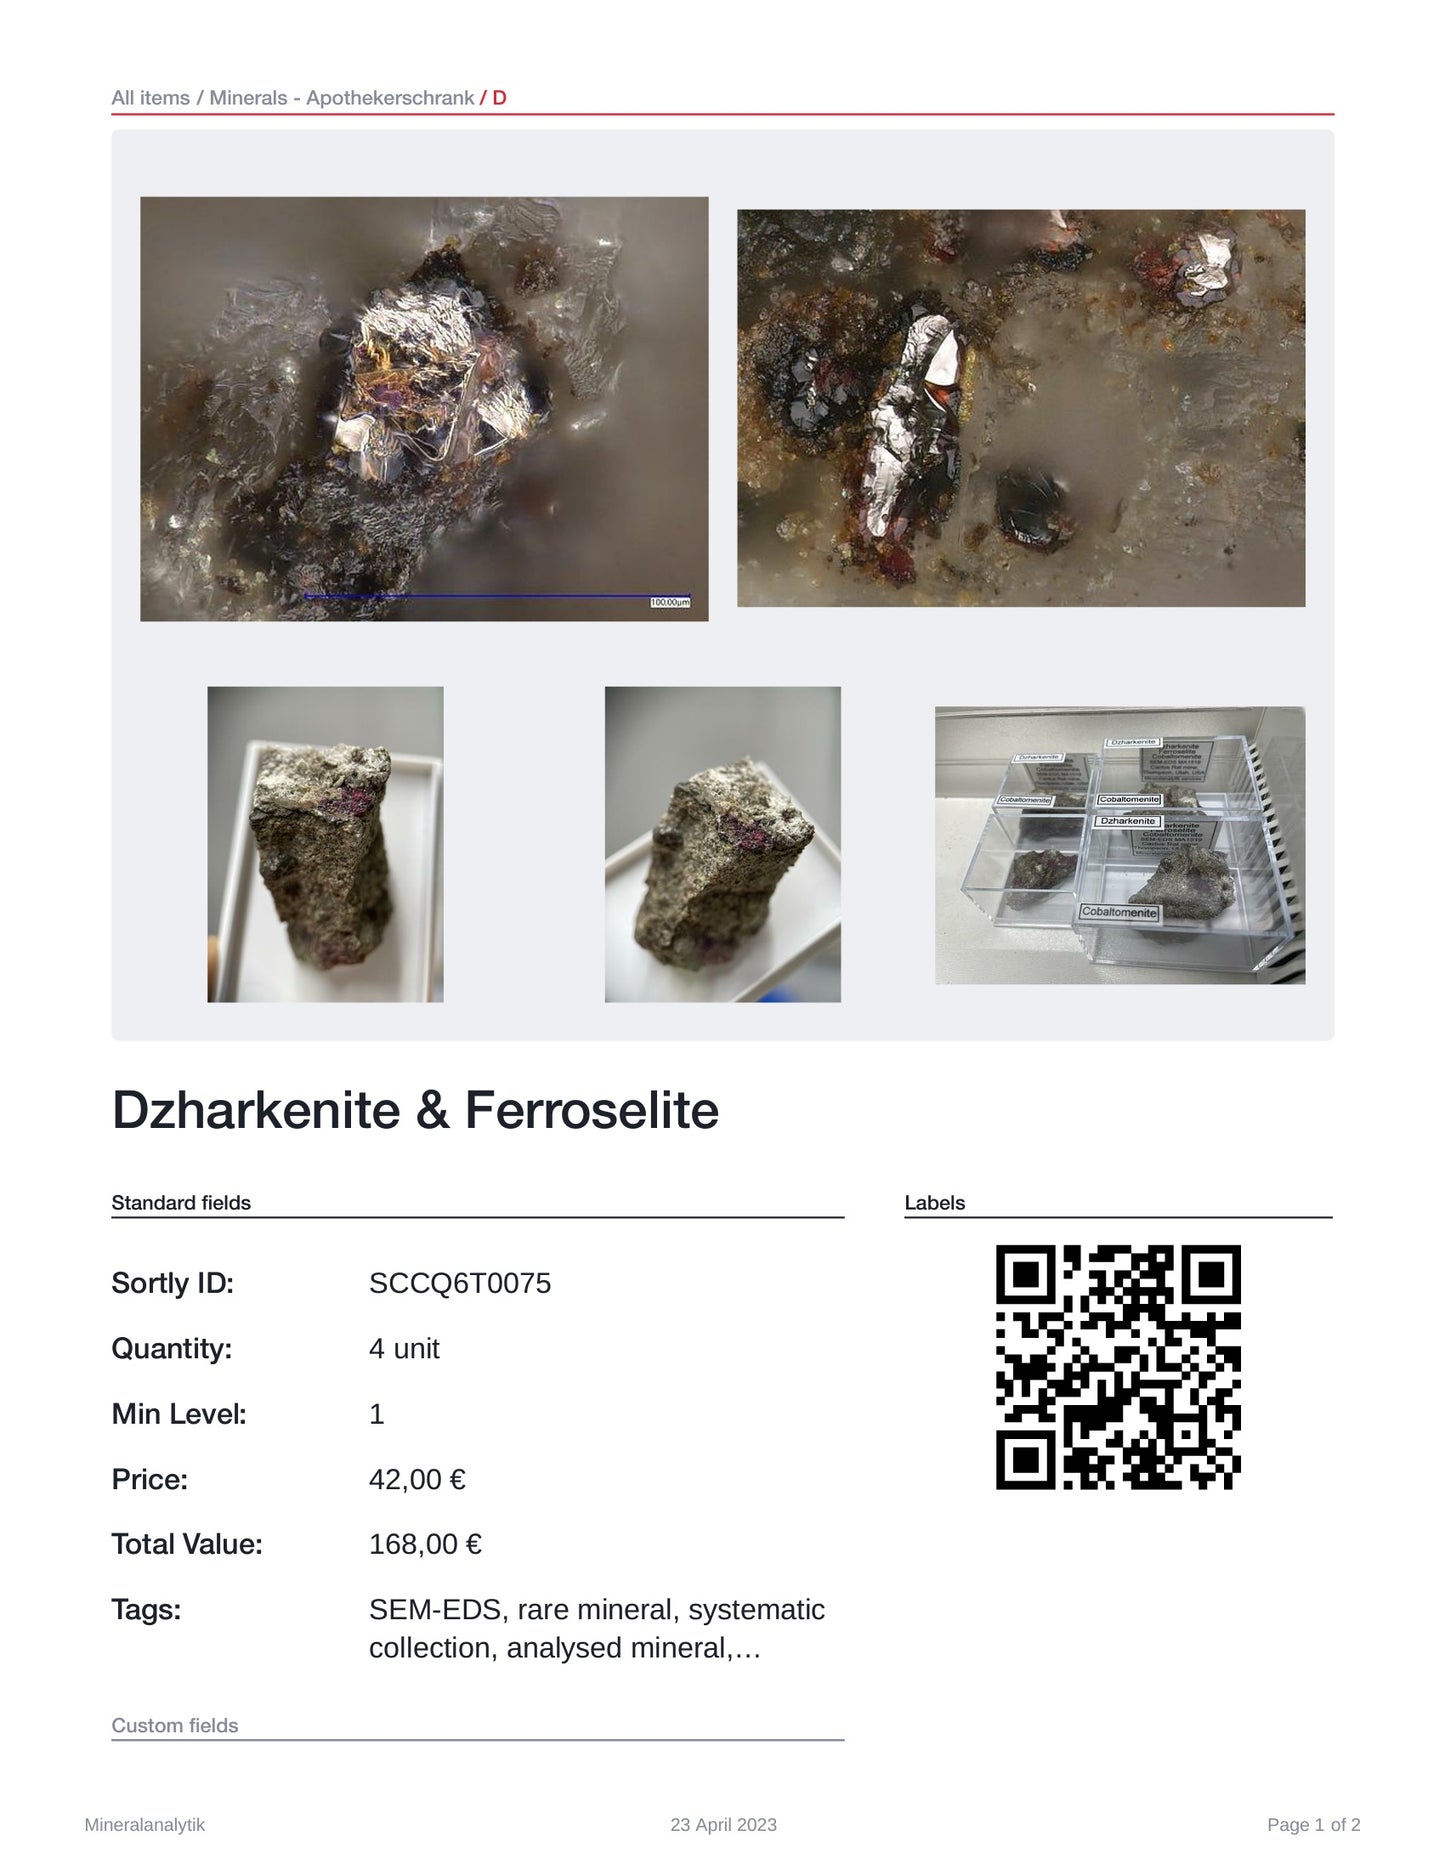 Dzharkenite & Ferroselite